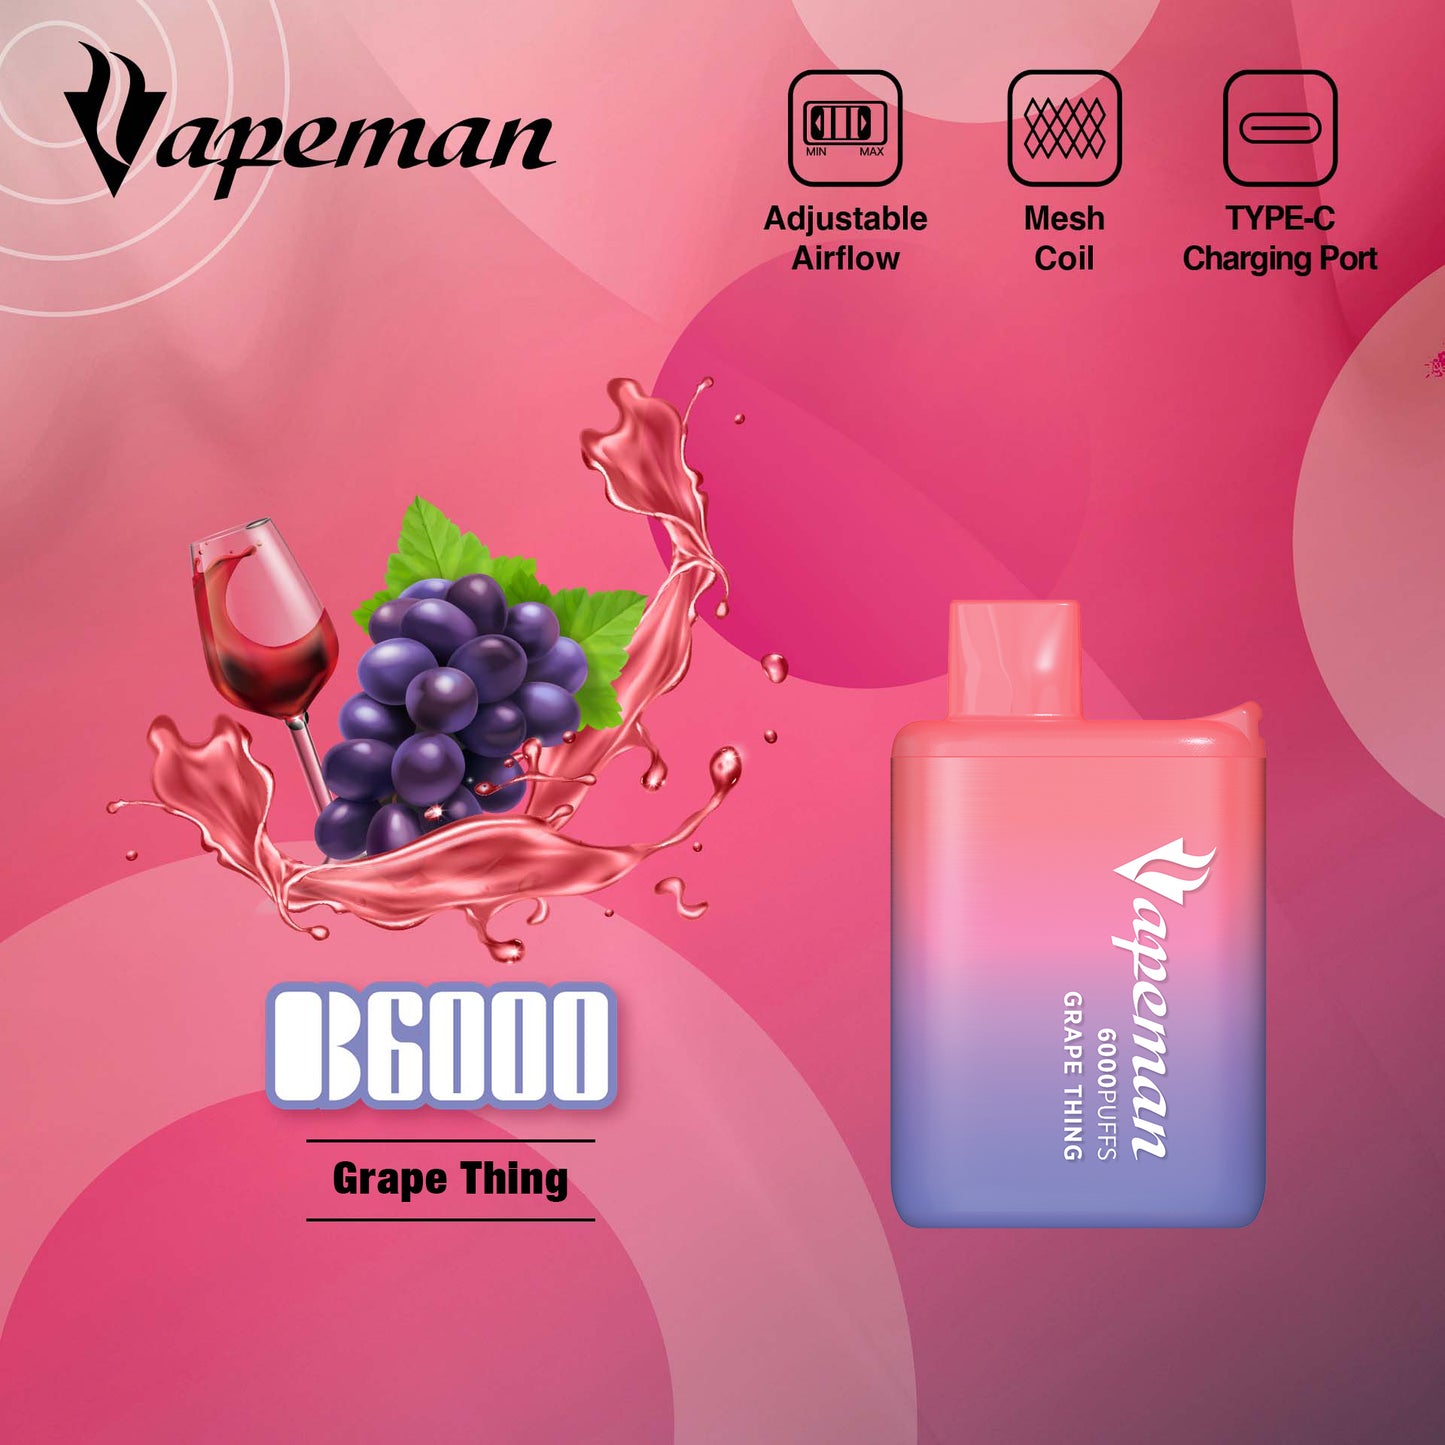 Vapeman - B6000 - Grape Thing -  Disposable Vape Device - Salt Nicotine 